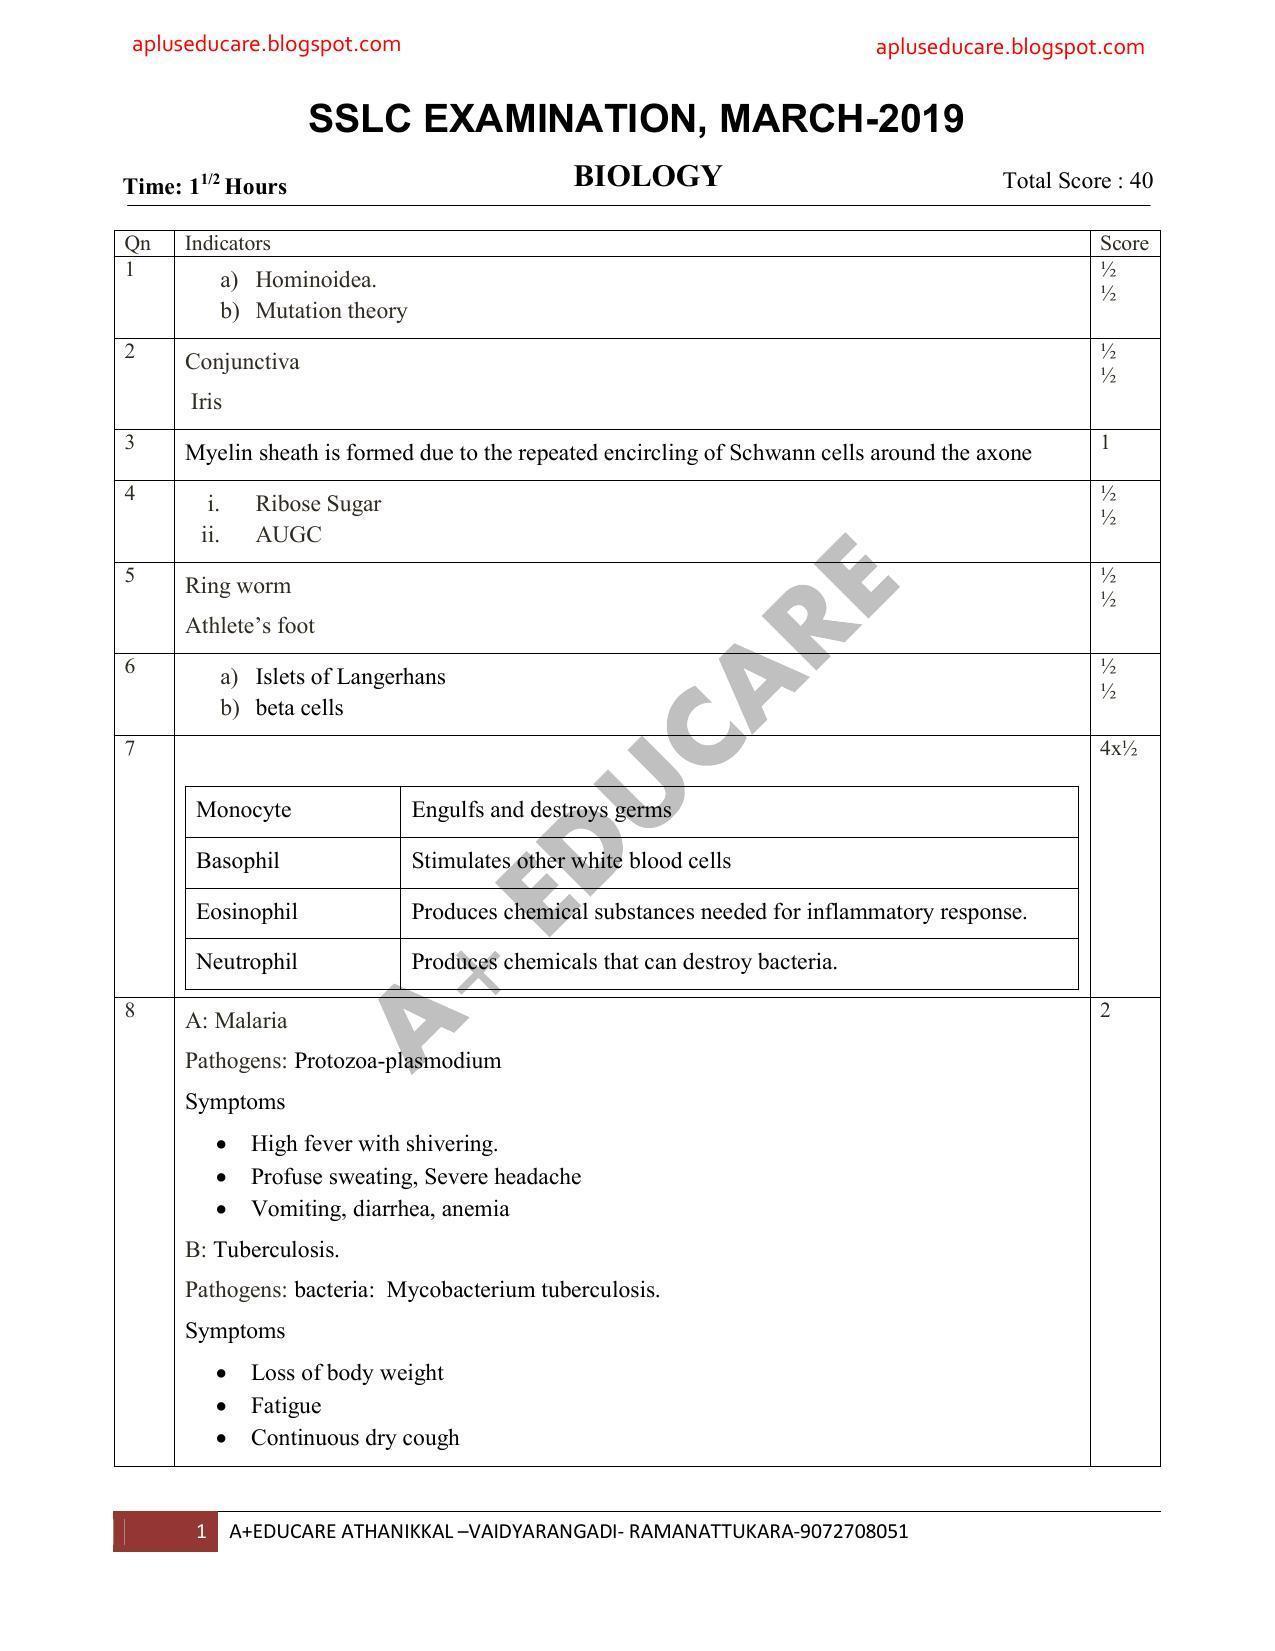 Kerala SSLC 2019  Biology Answer Key (EM) - Page 1